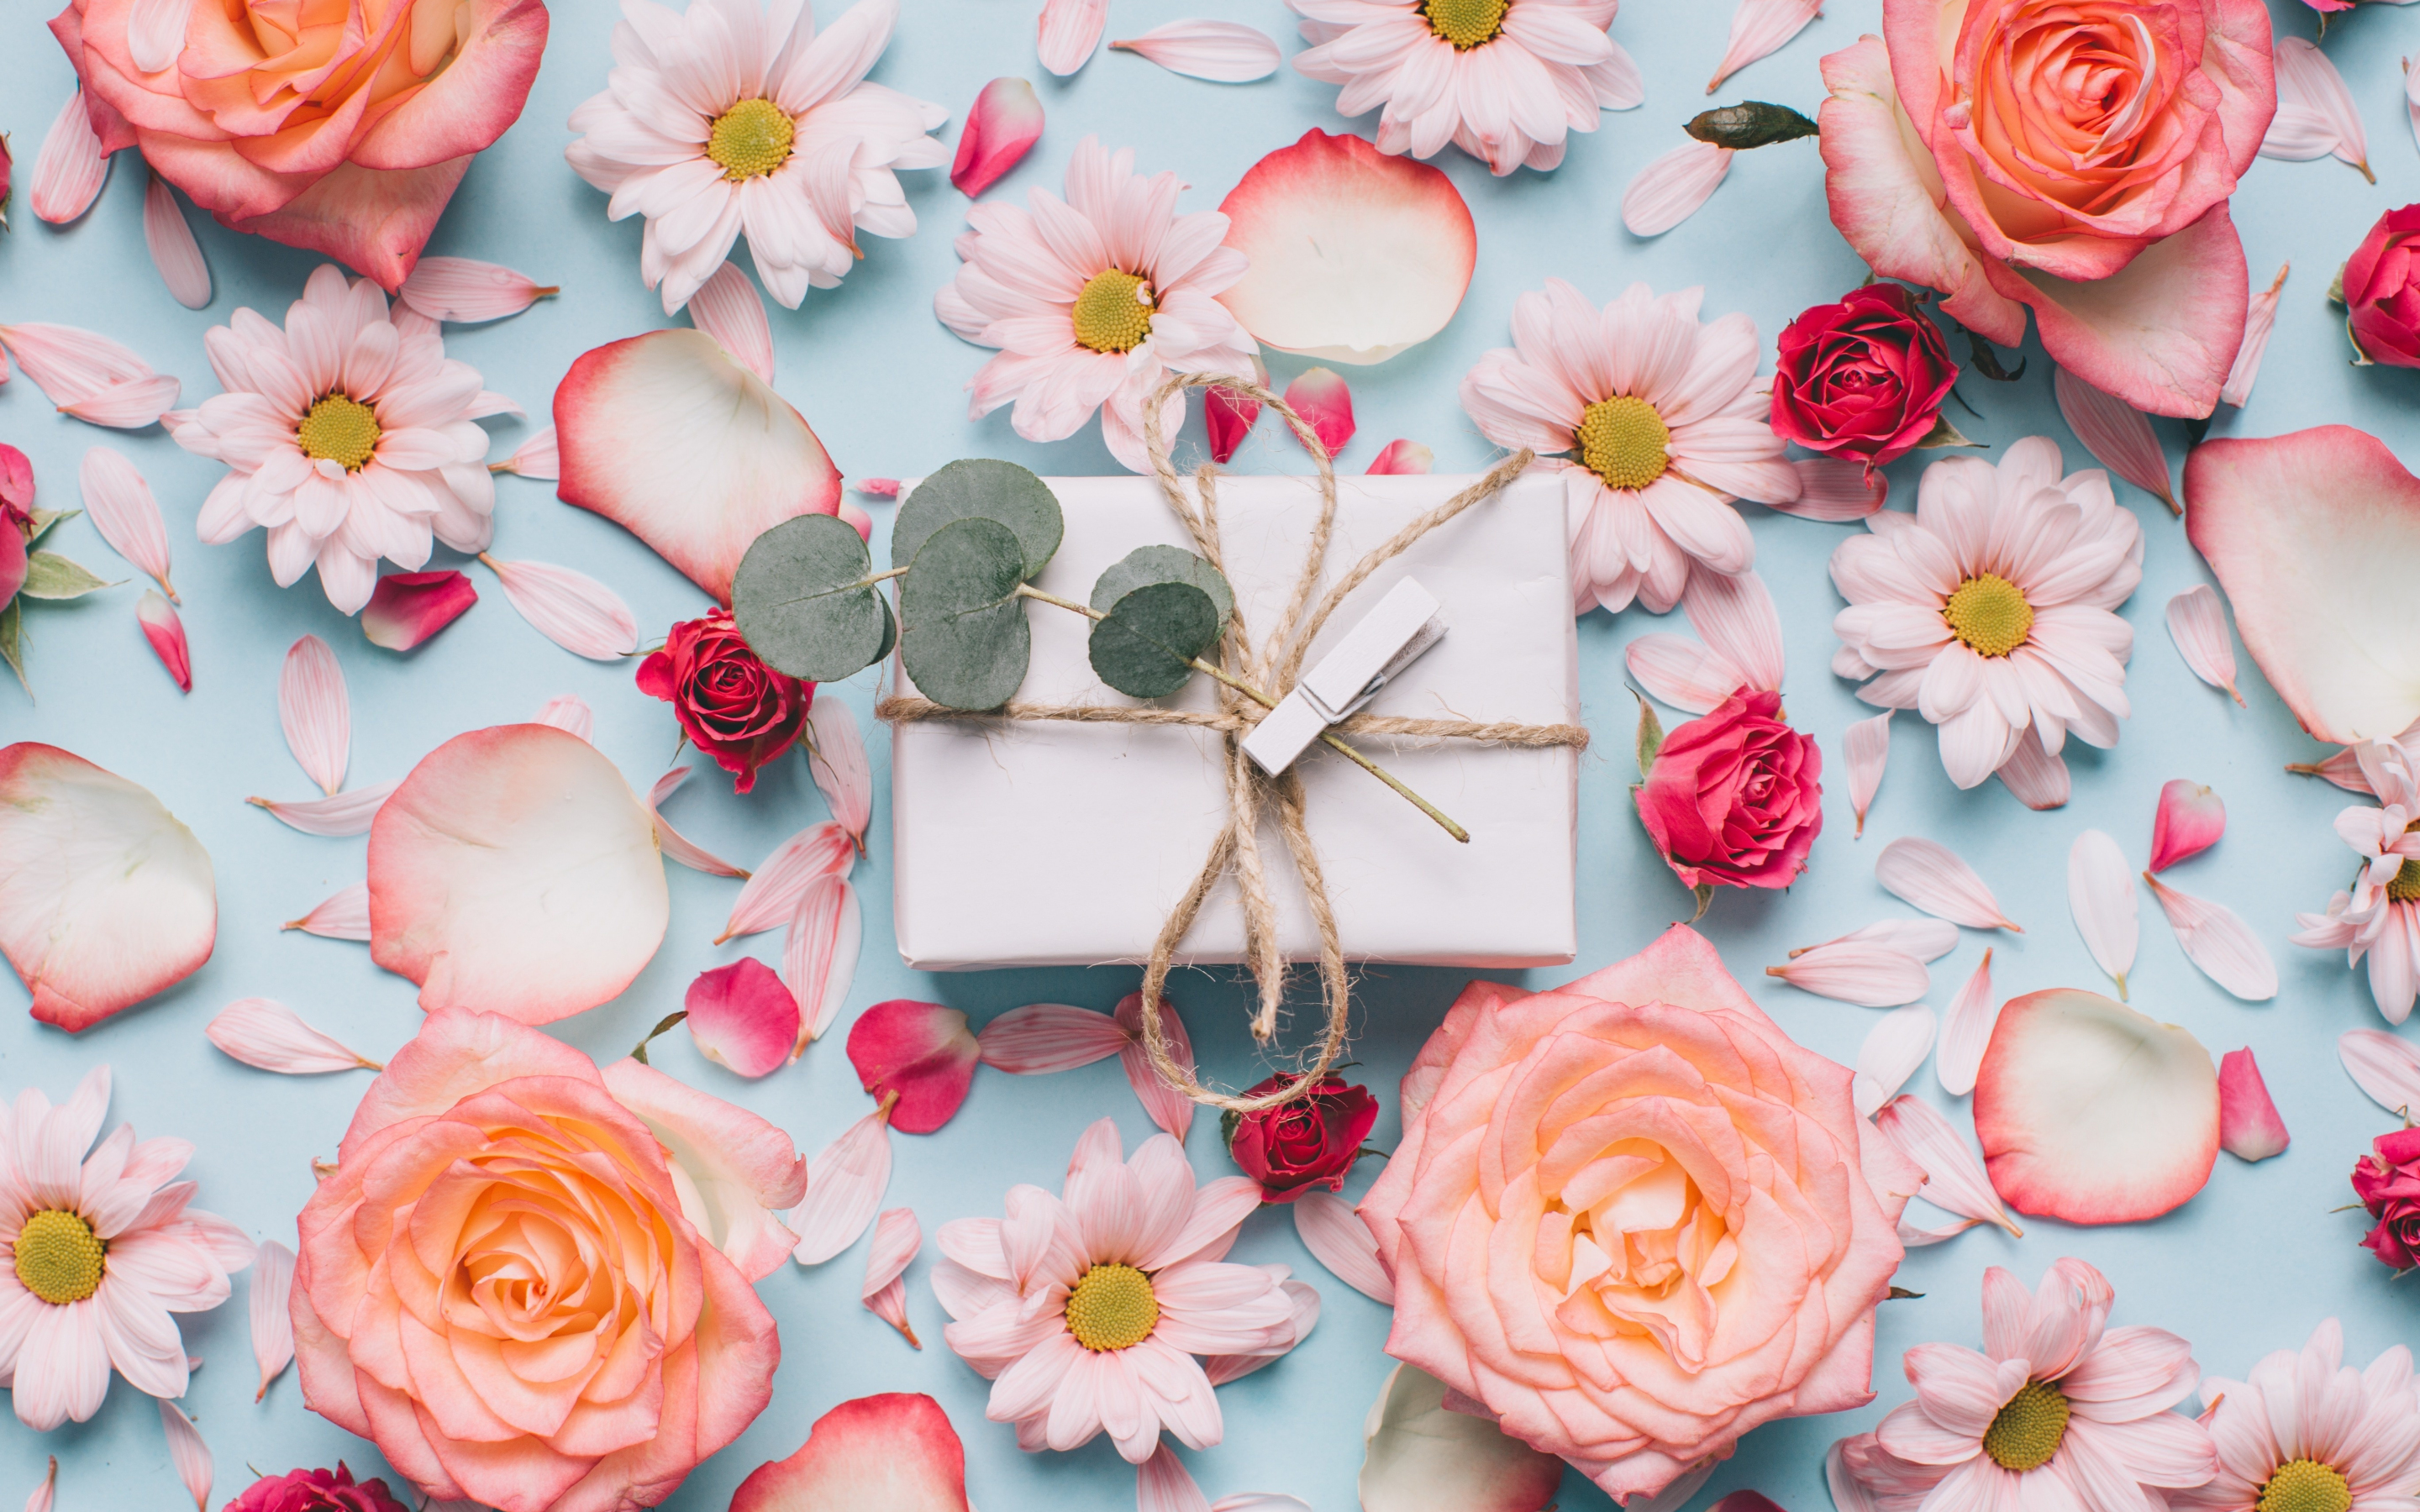 Flowers, roses, petals, gift box, 2880x1800 wallpaper